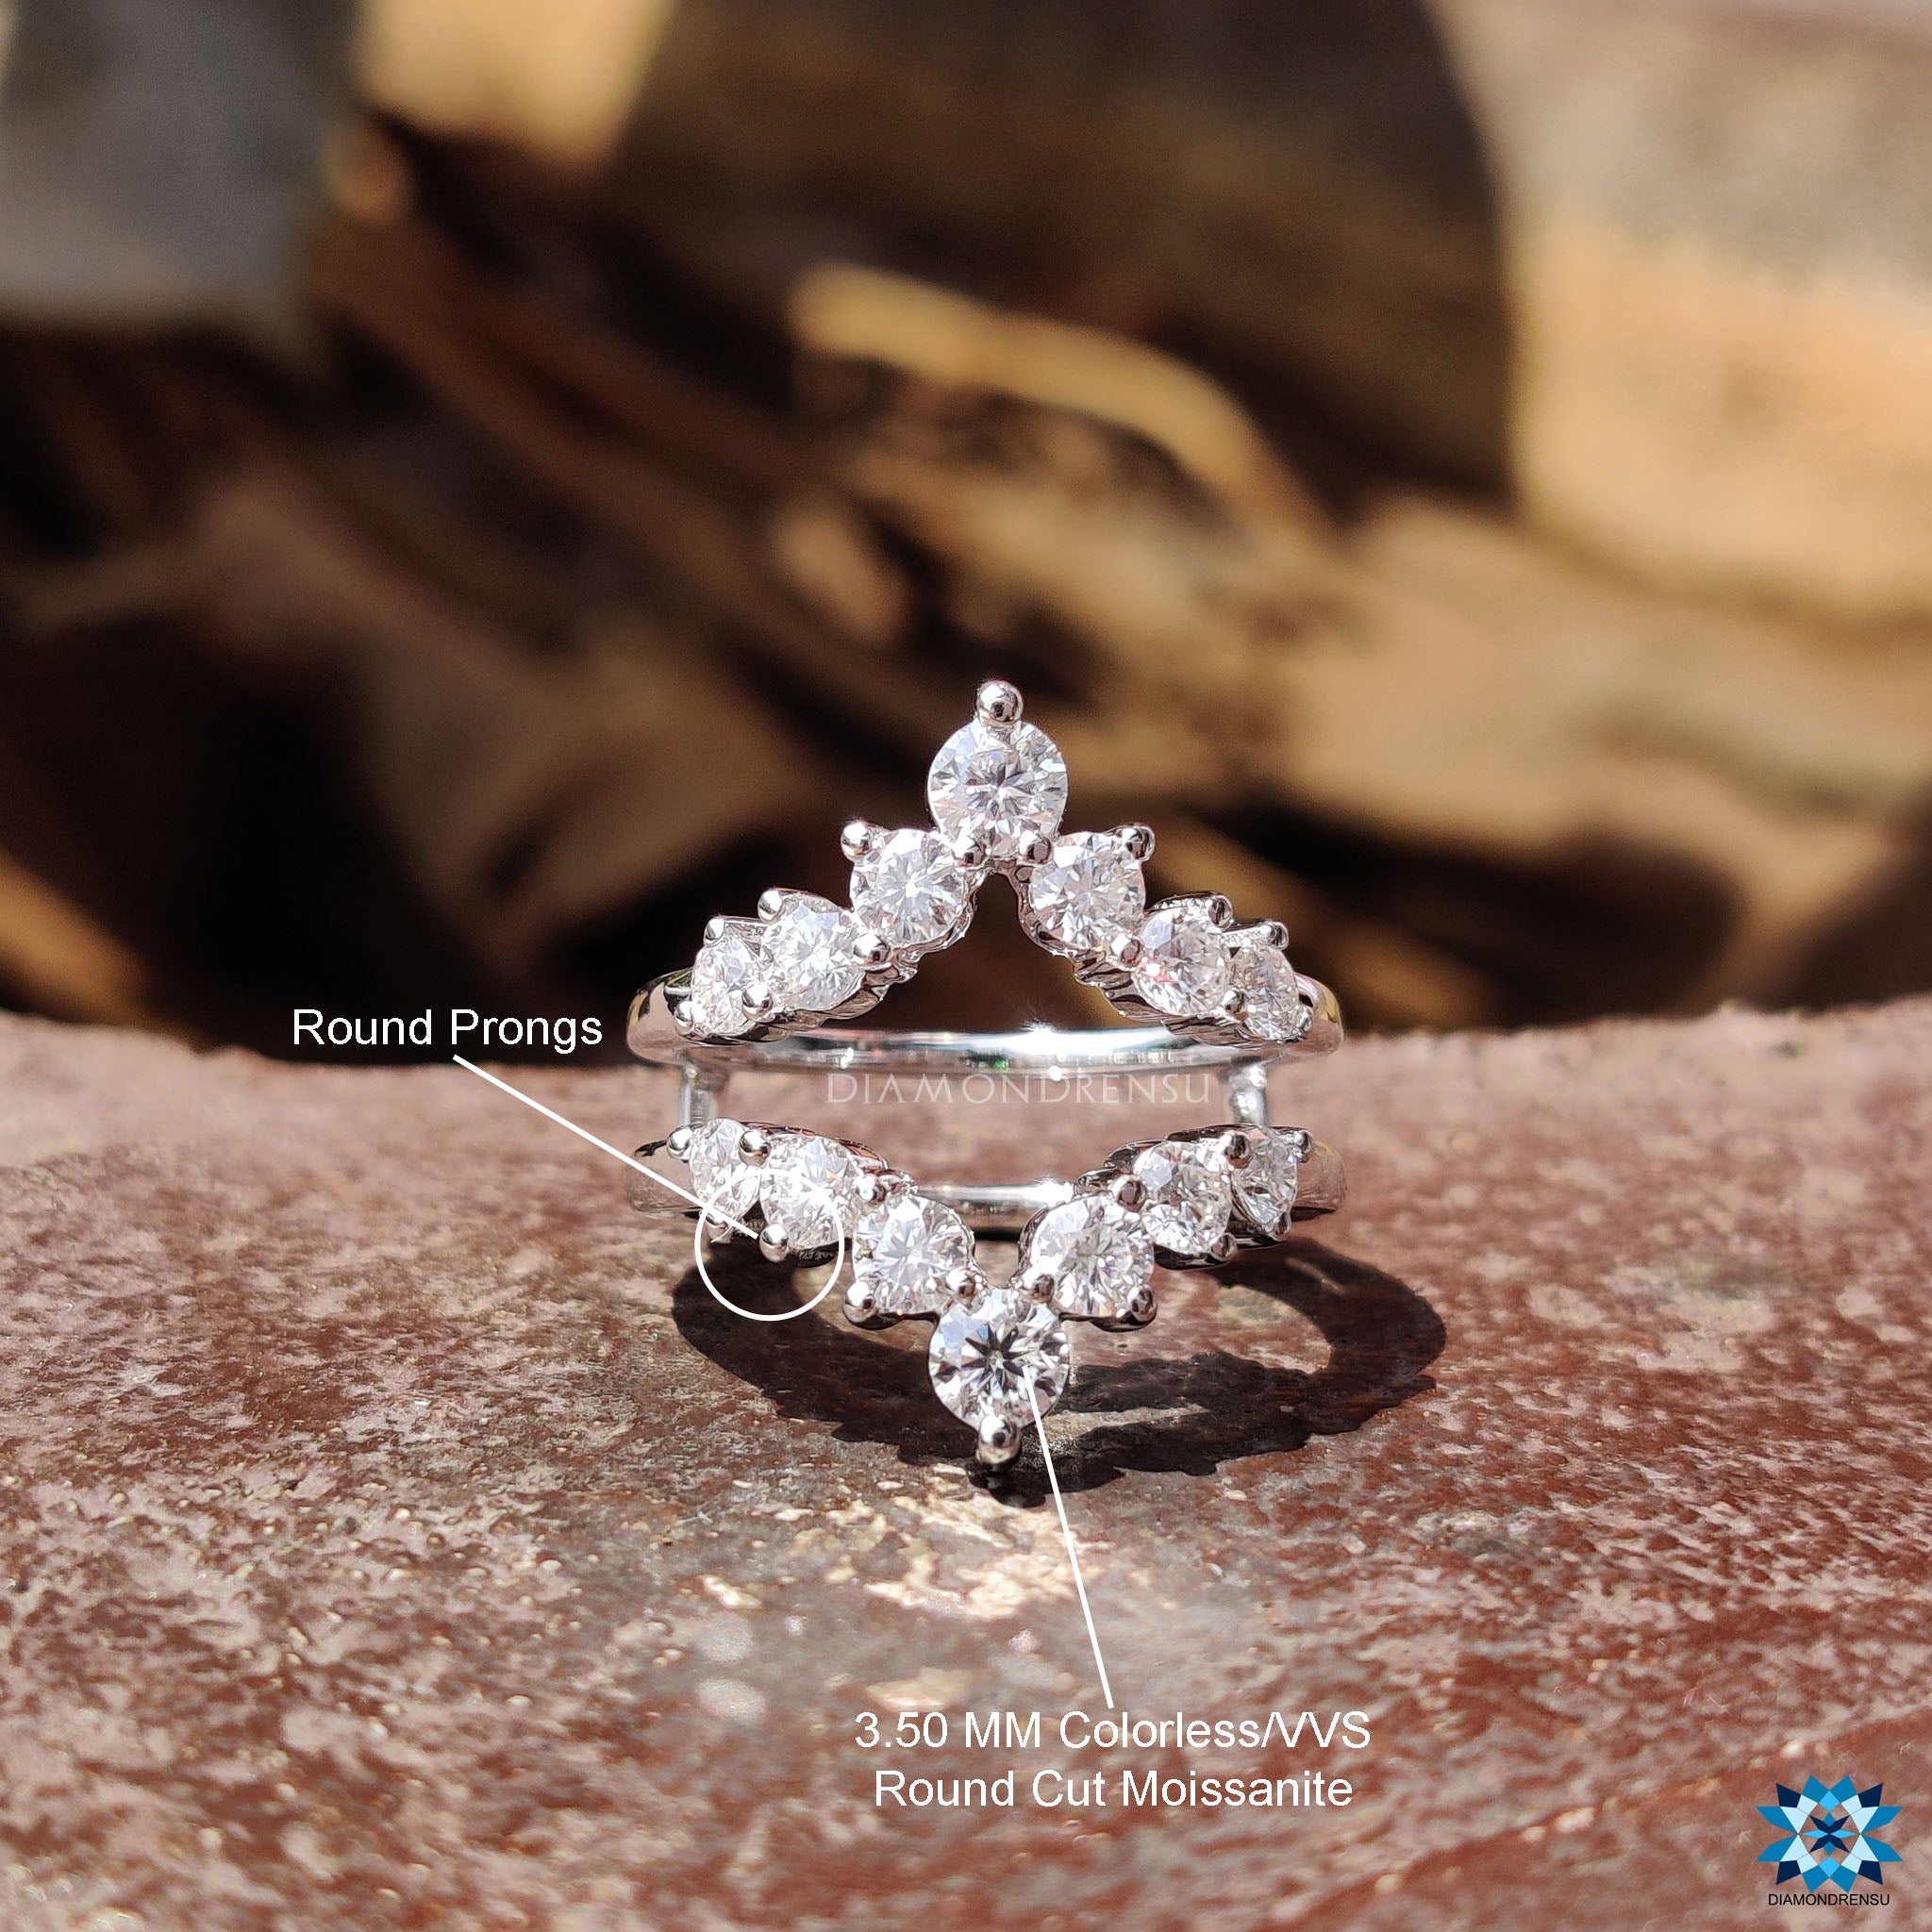 1ct TW Diamond Wedding Guard Band Insert Engagement Ring 14k Gold Lab Grown